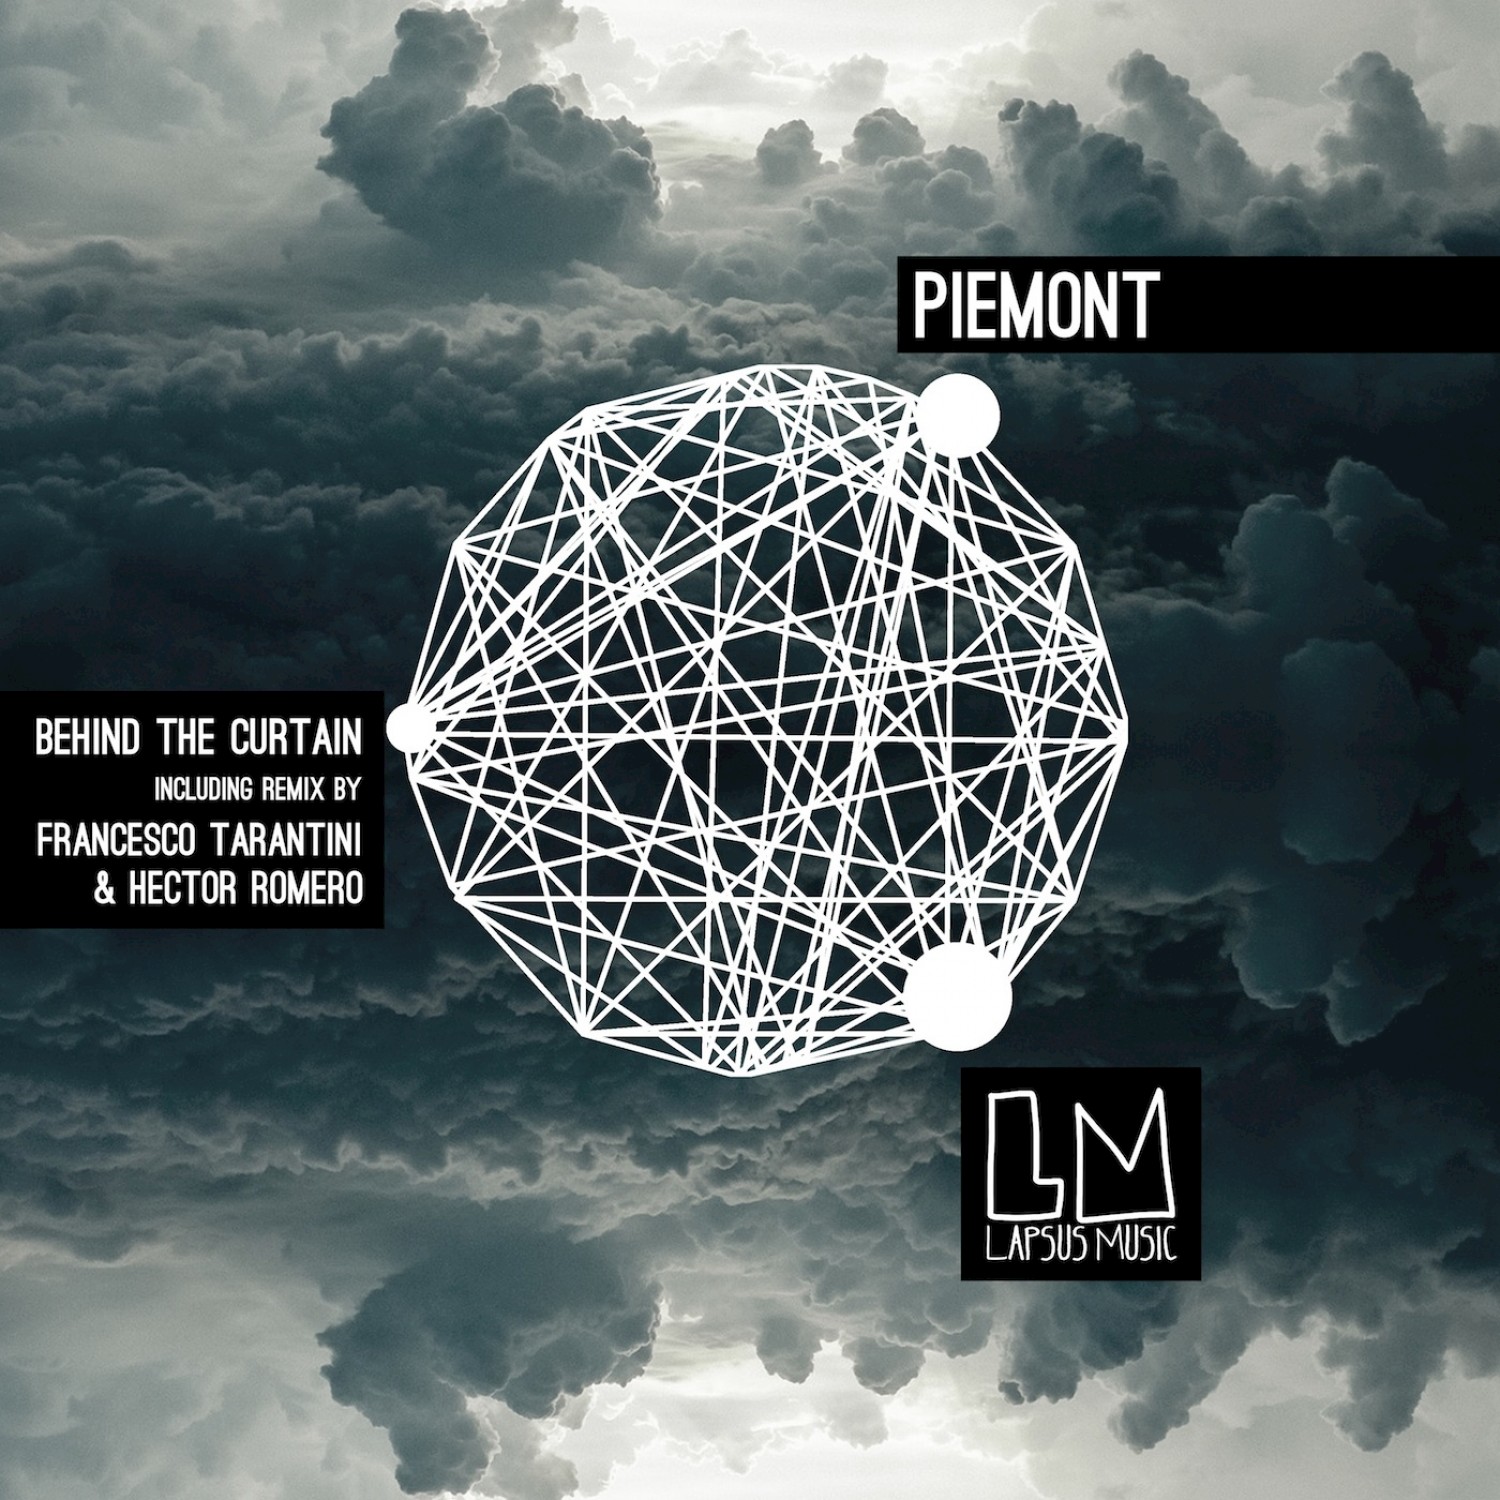 Behind the Curtain (Francesco Tarantini & Hector Romero Underground Mix)